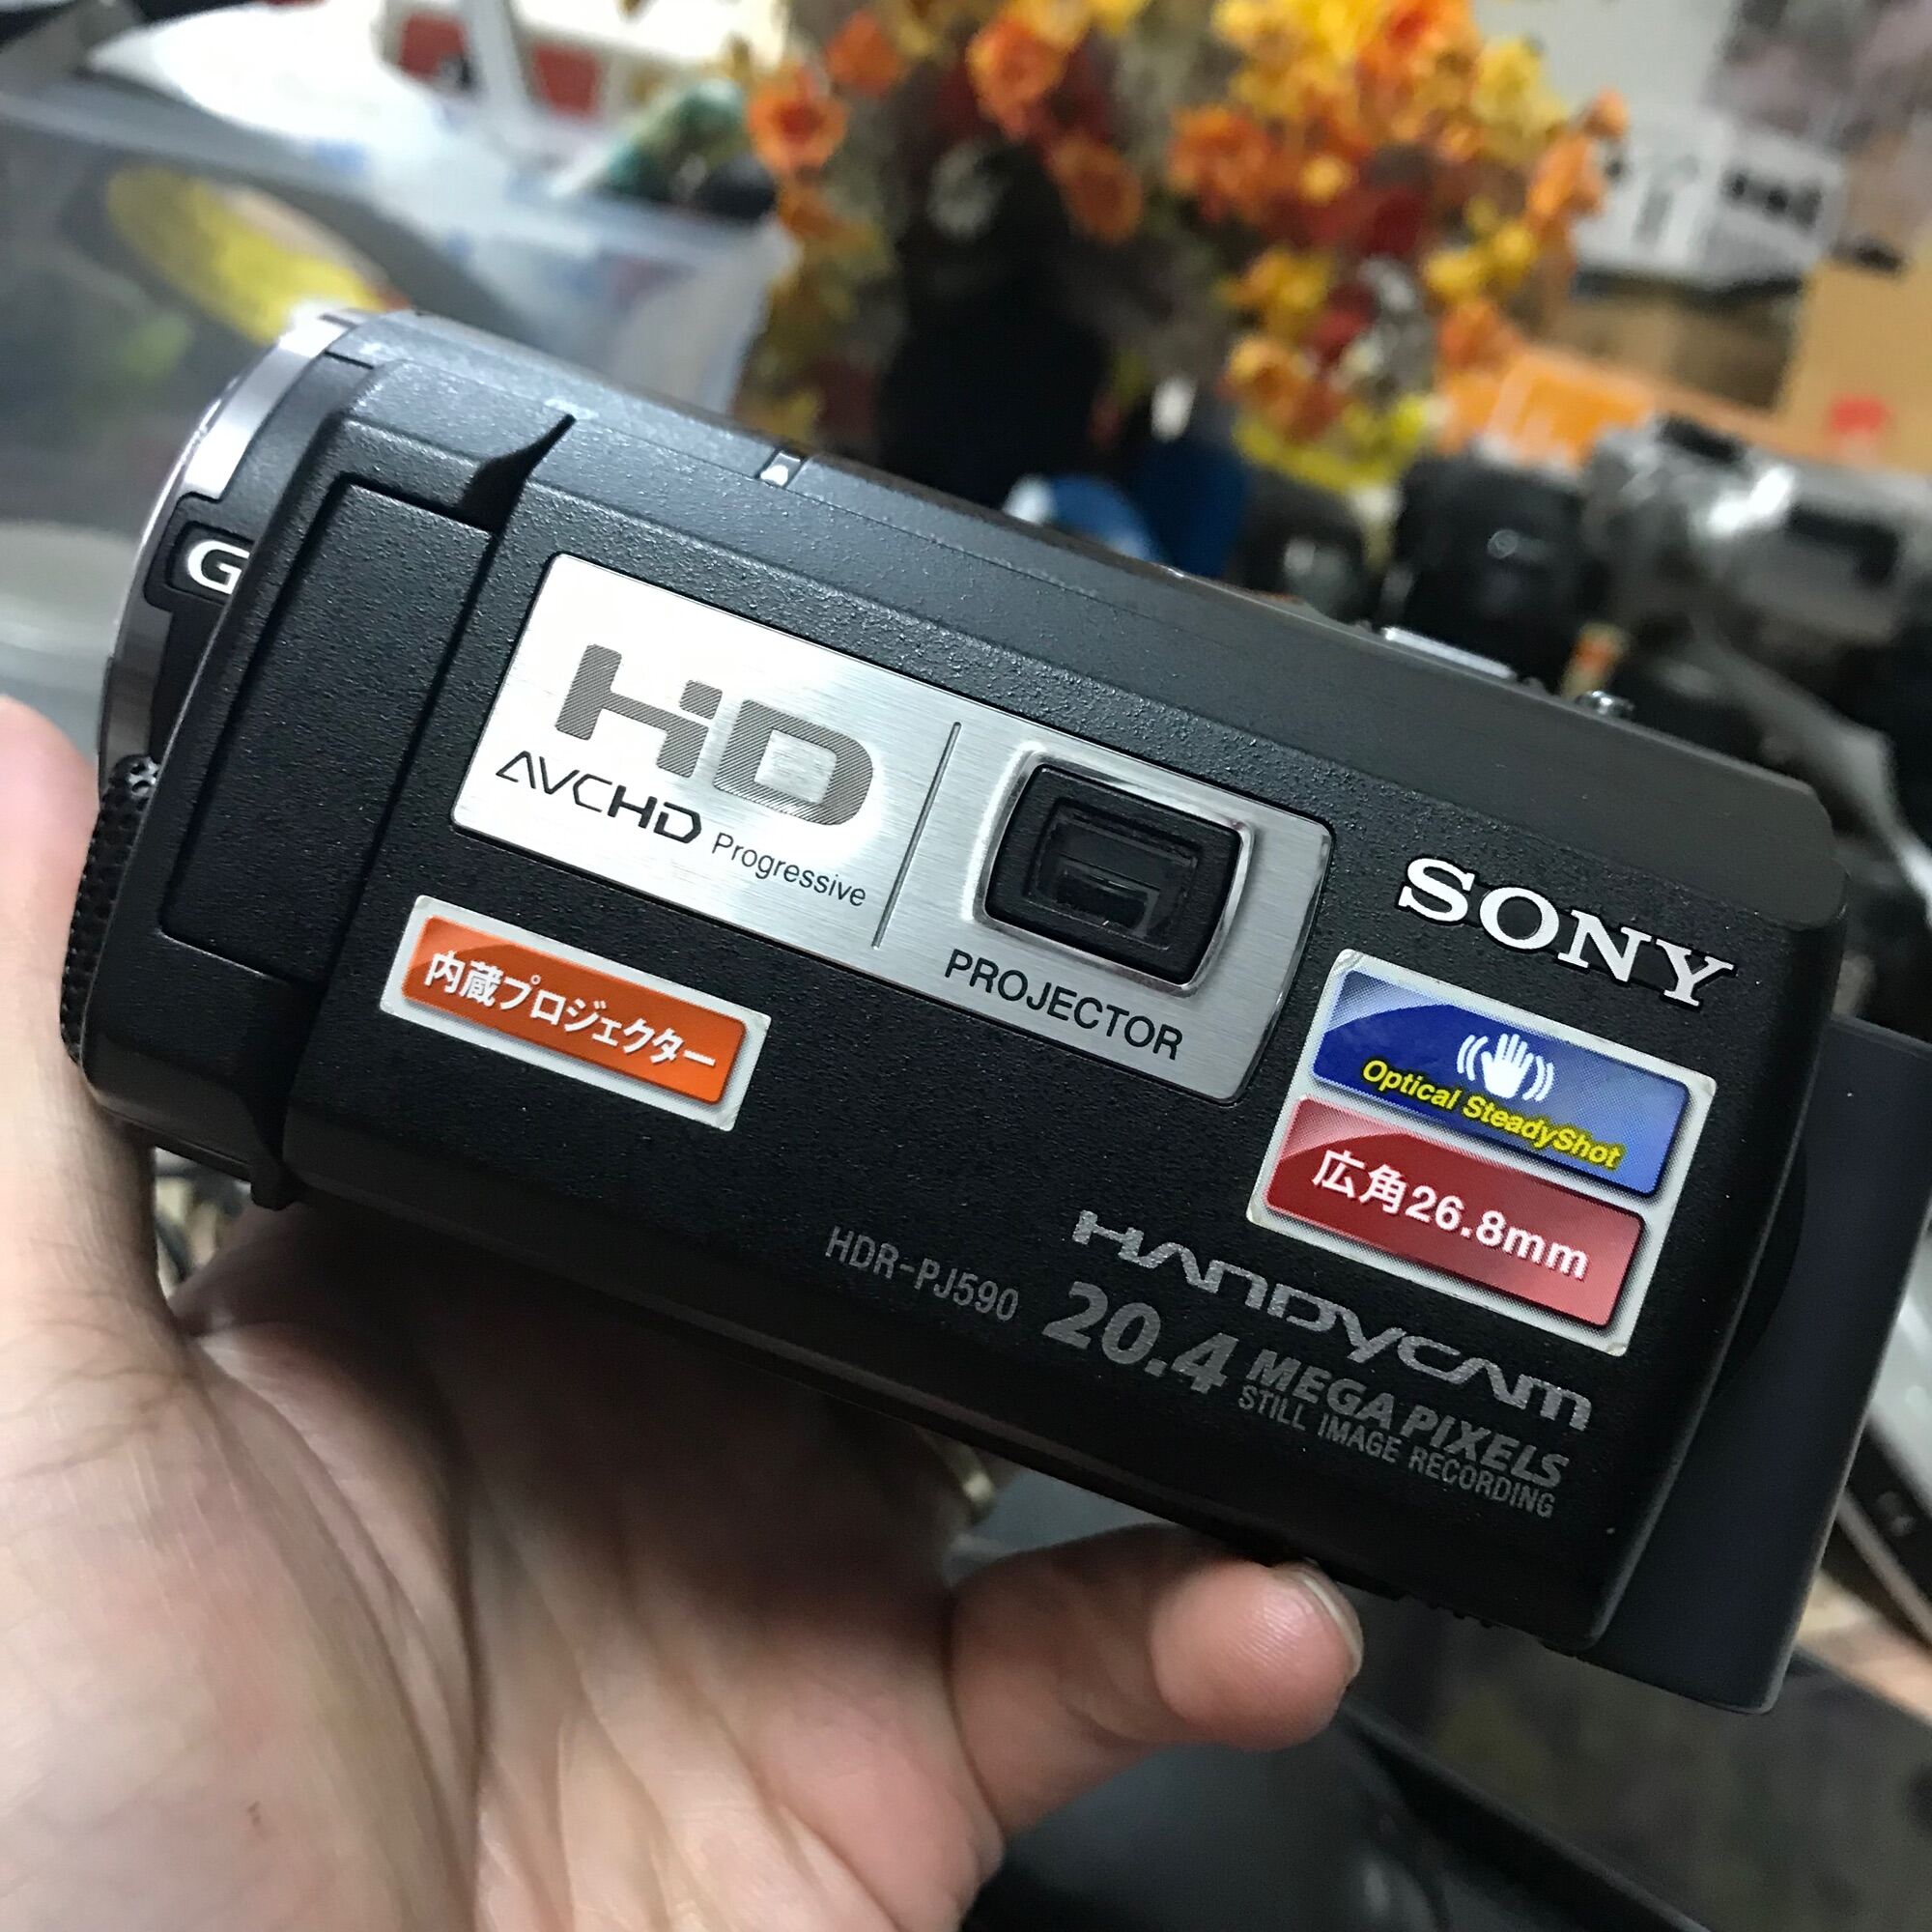 adgang semafor Der er behov for Sony HDR-PJ590 máy quay cao cấp | Lazada.vn